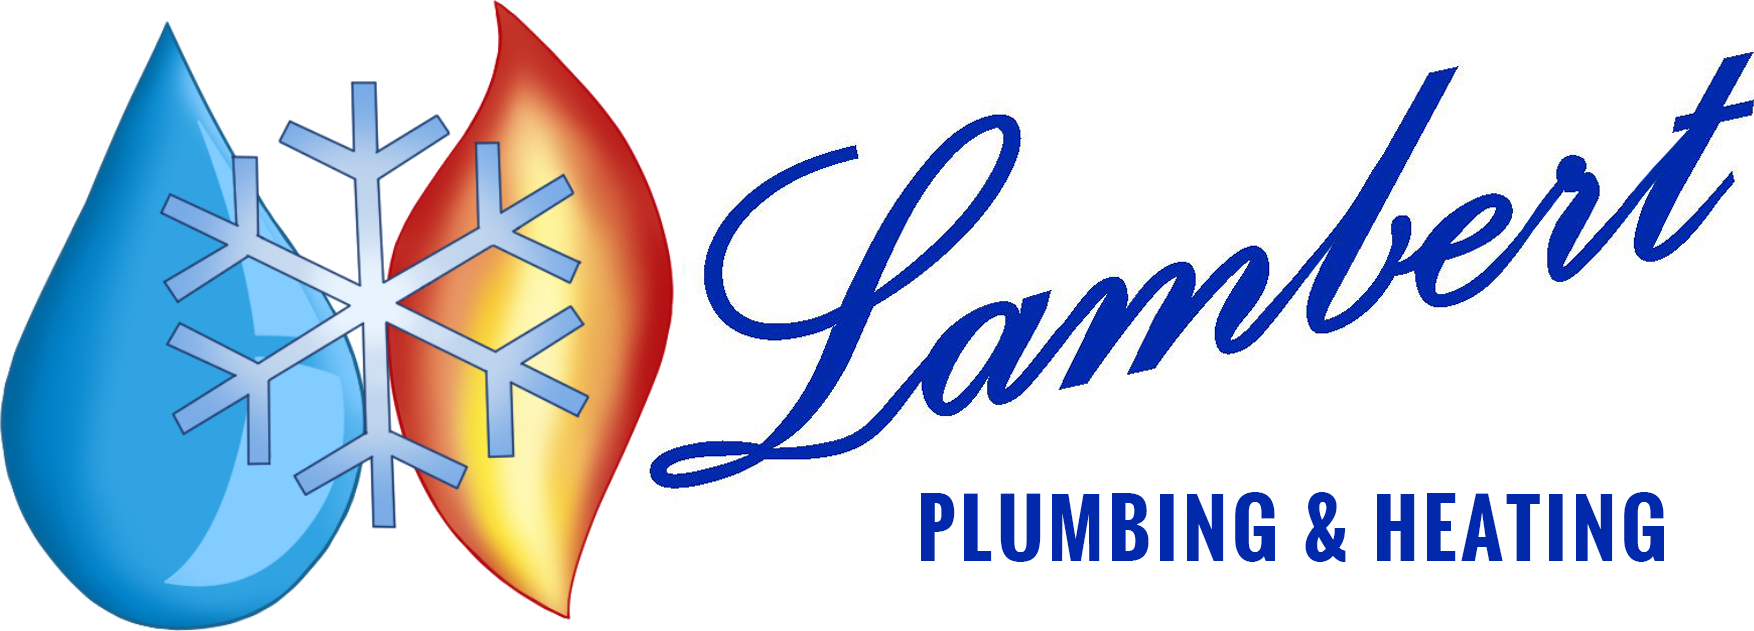 Lambert Plumbing & Heating Logo